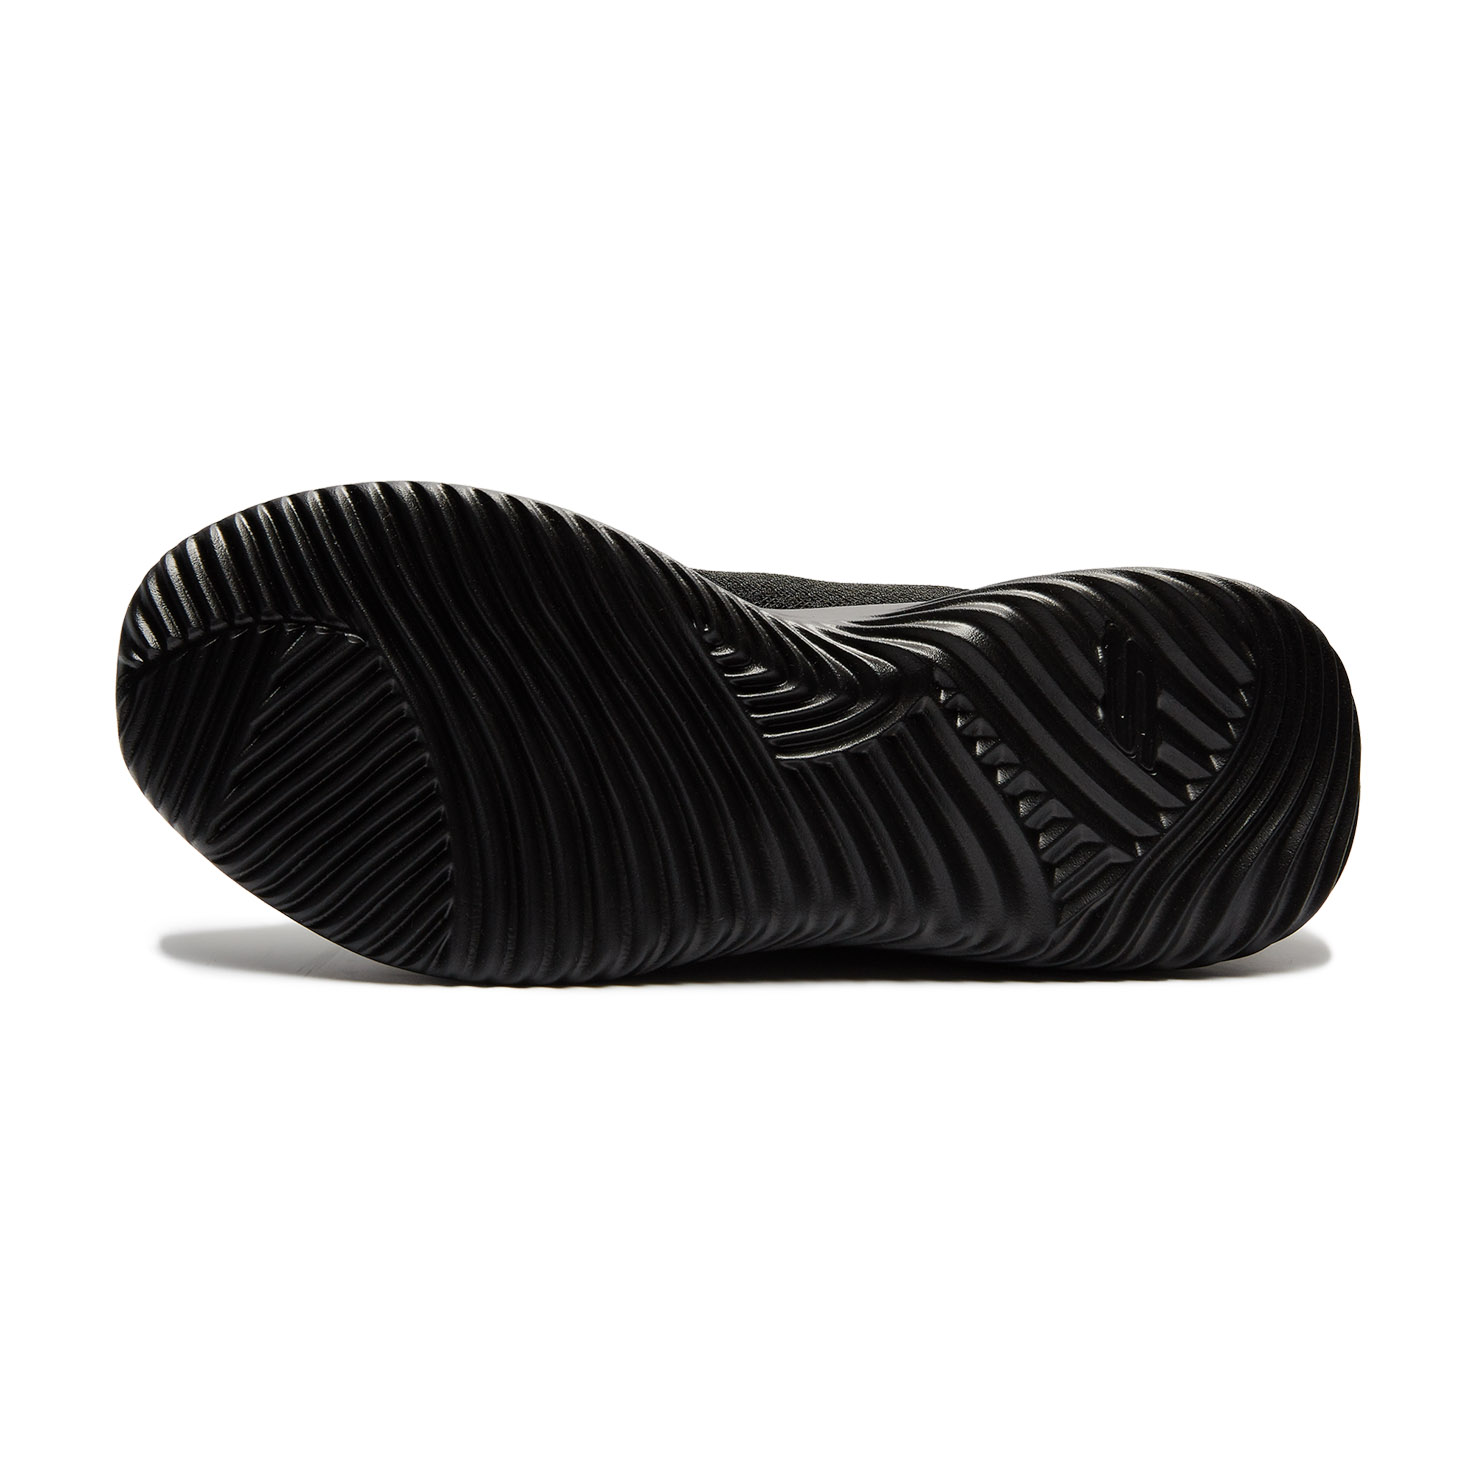 Men's low shoes SKECHERS, размер 40, цвет черный SK232005 - фото 6